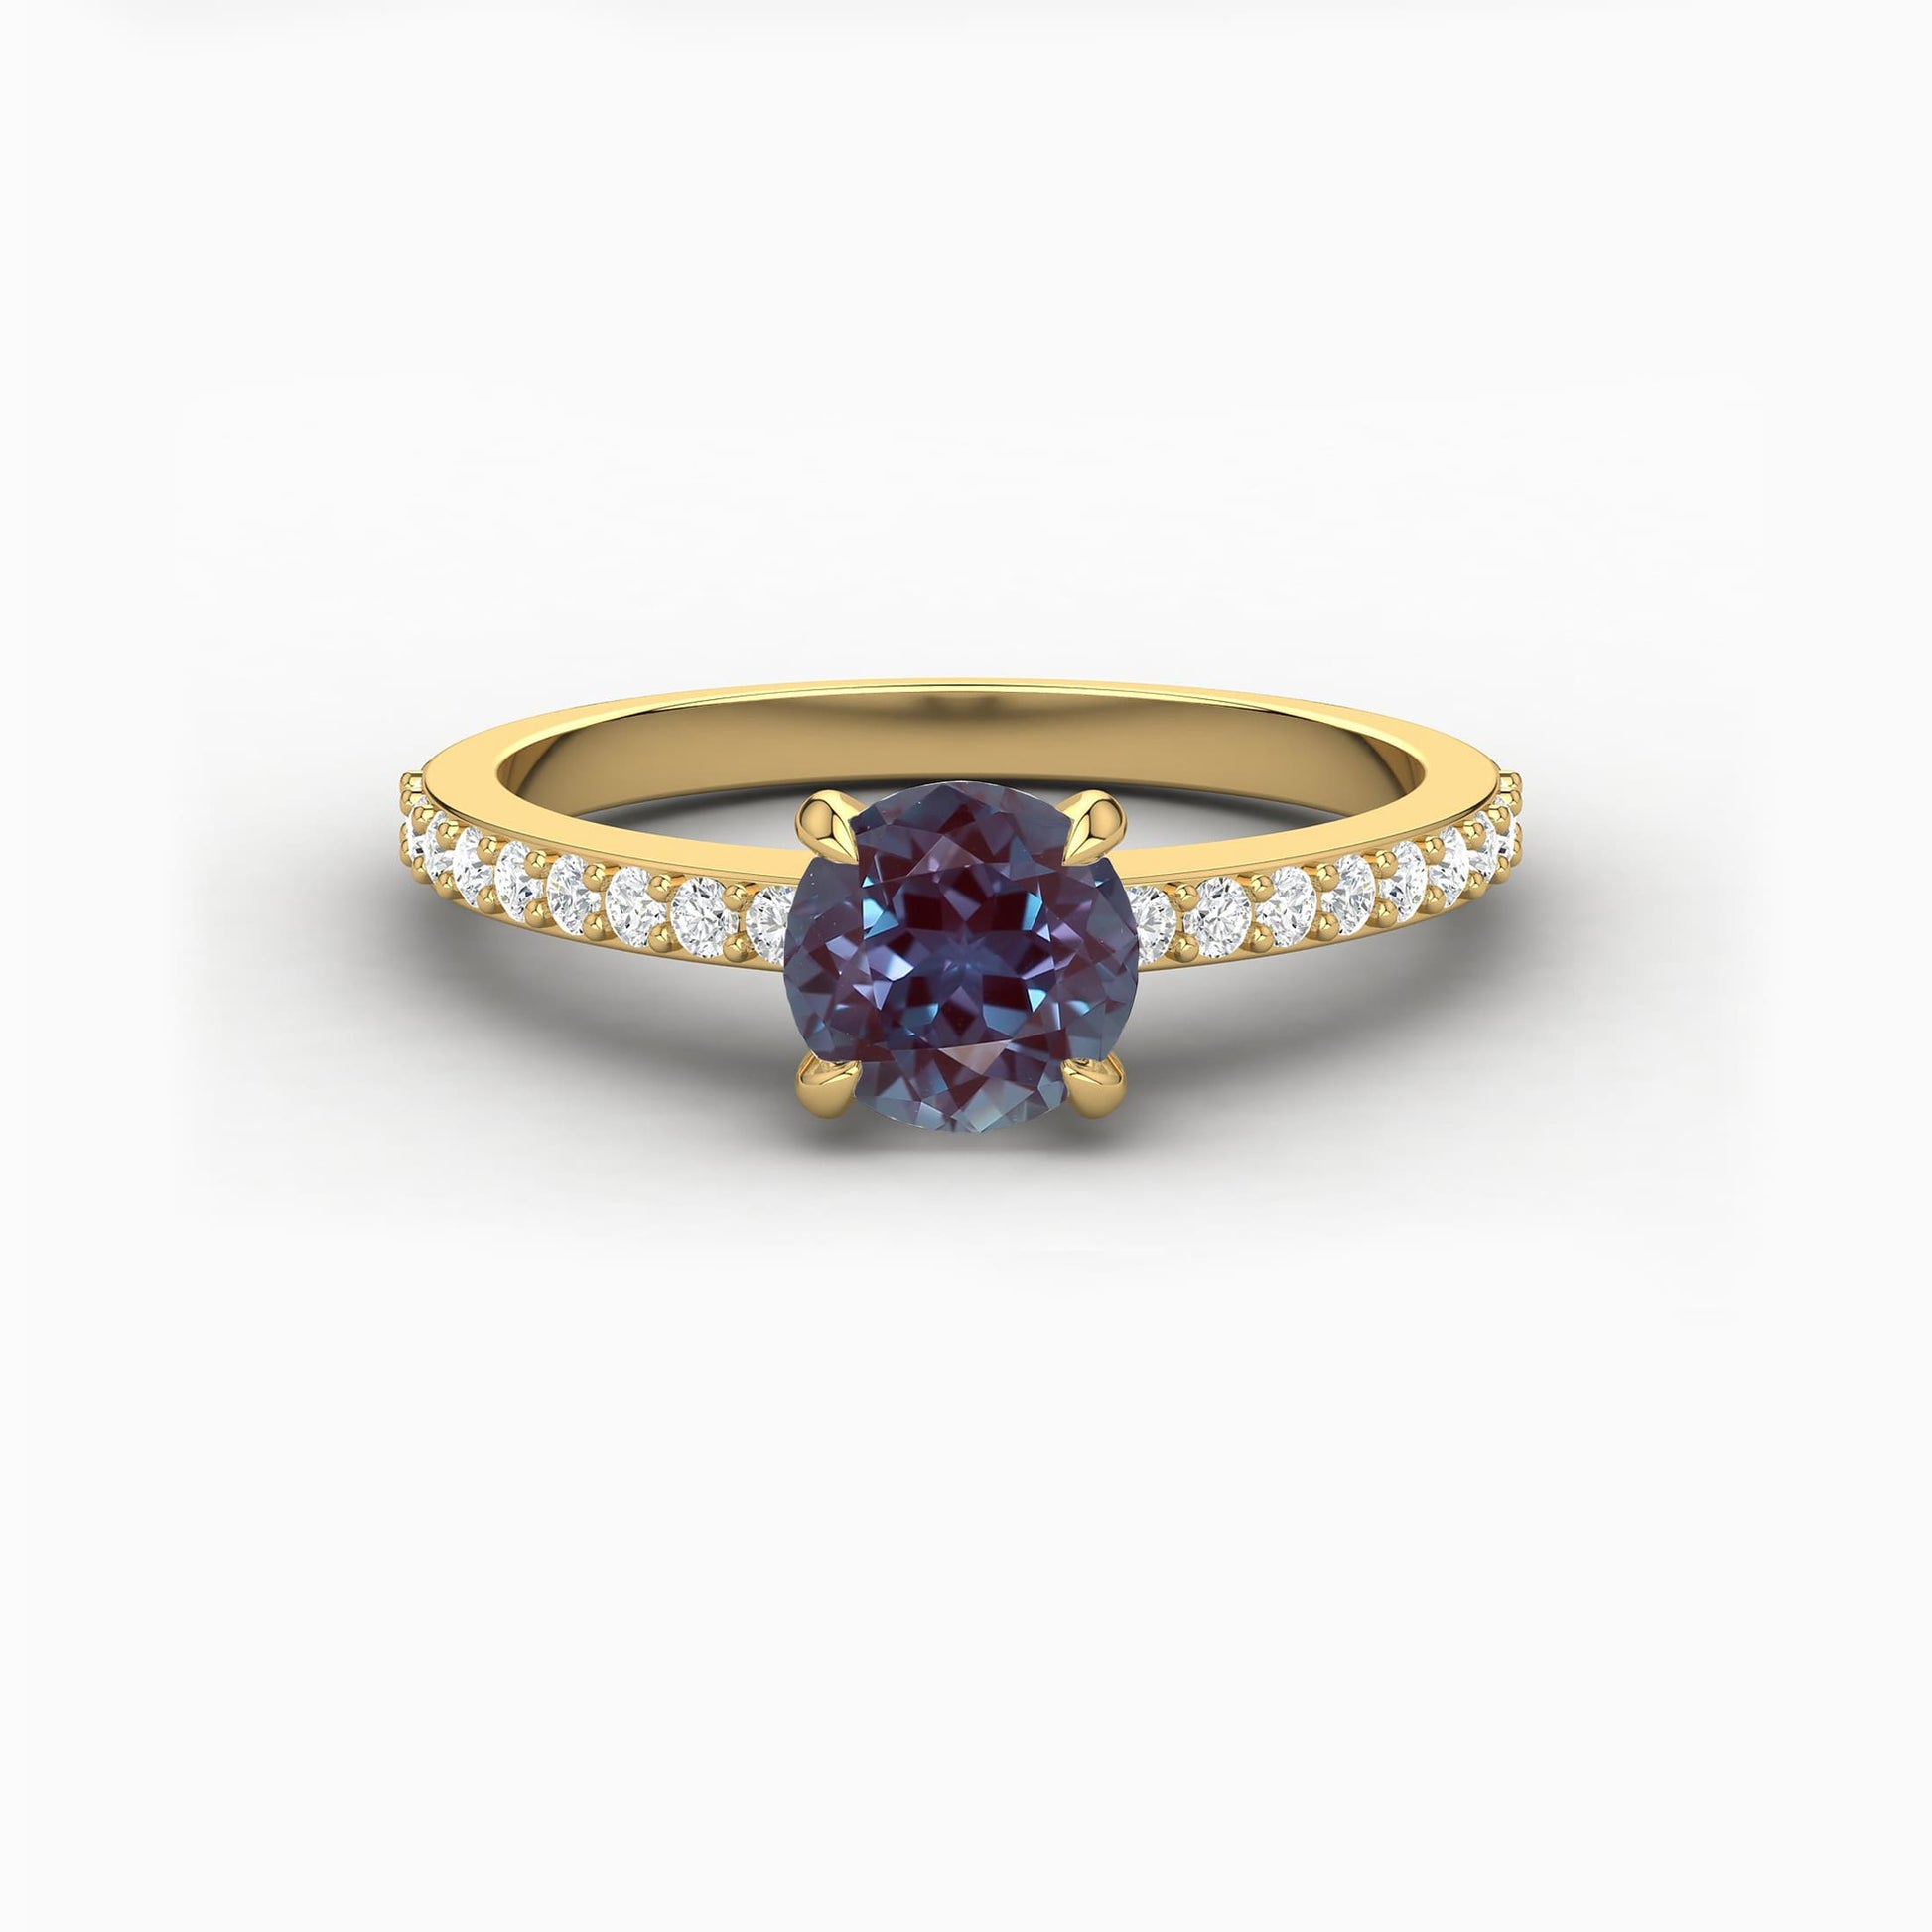 Alexandrite engagement ring